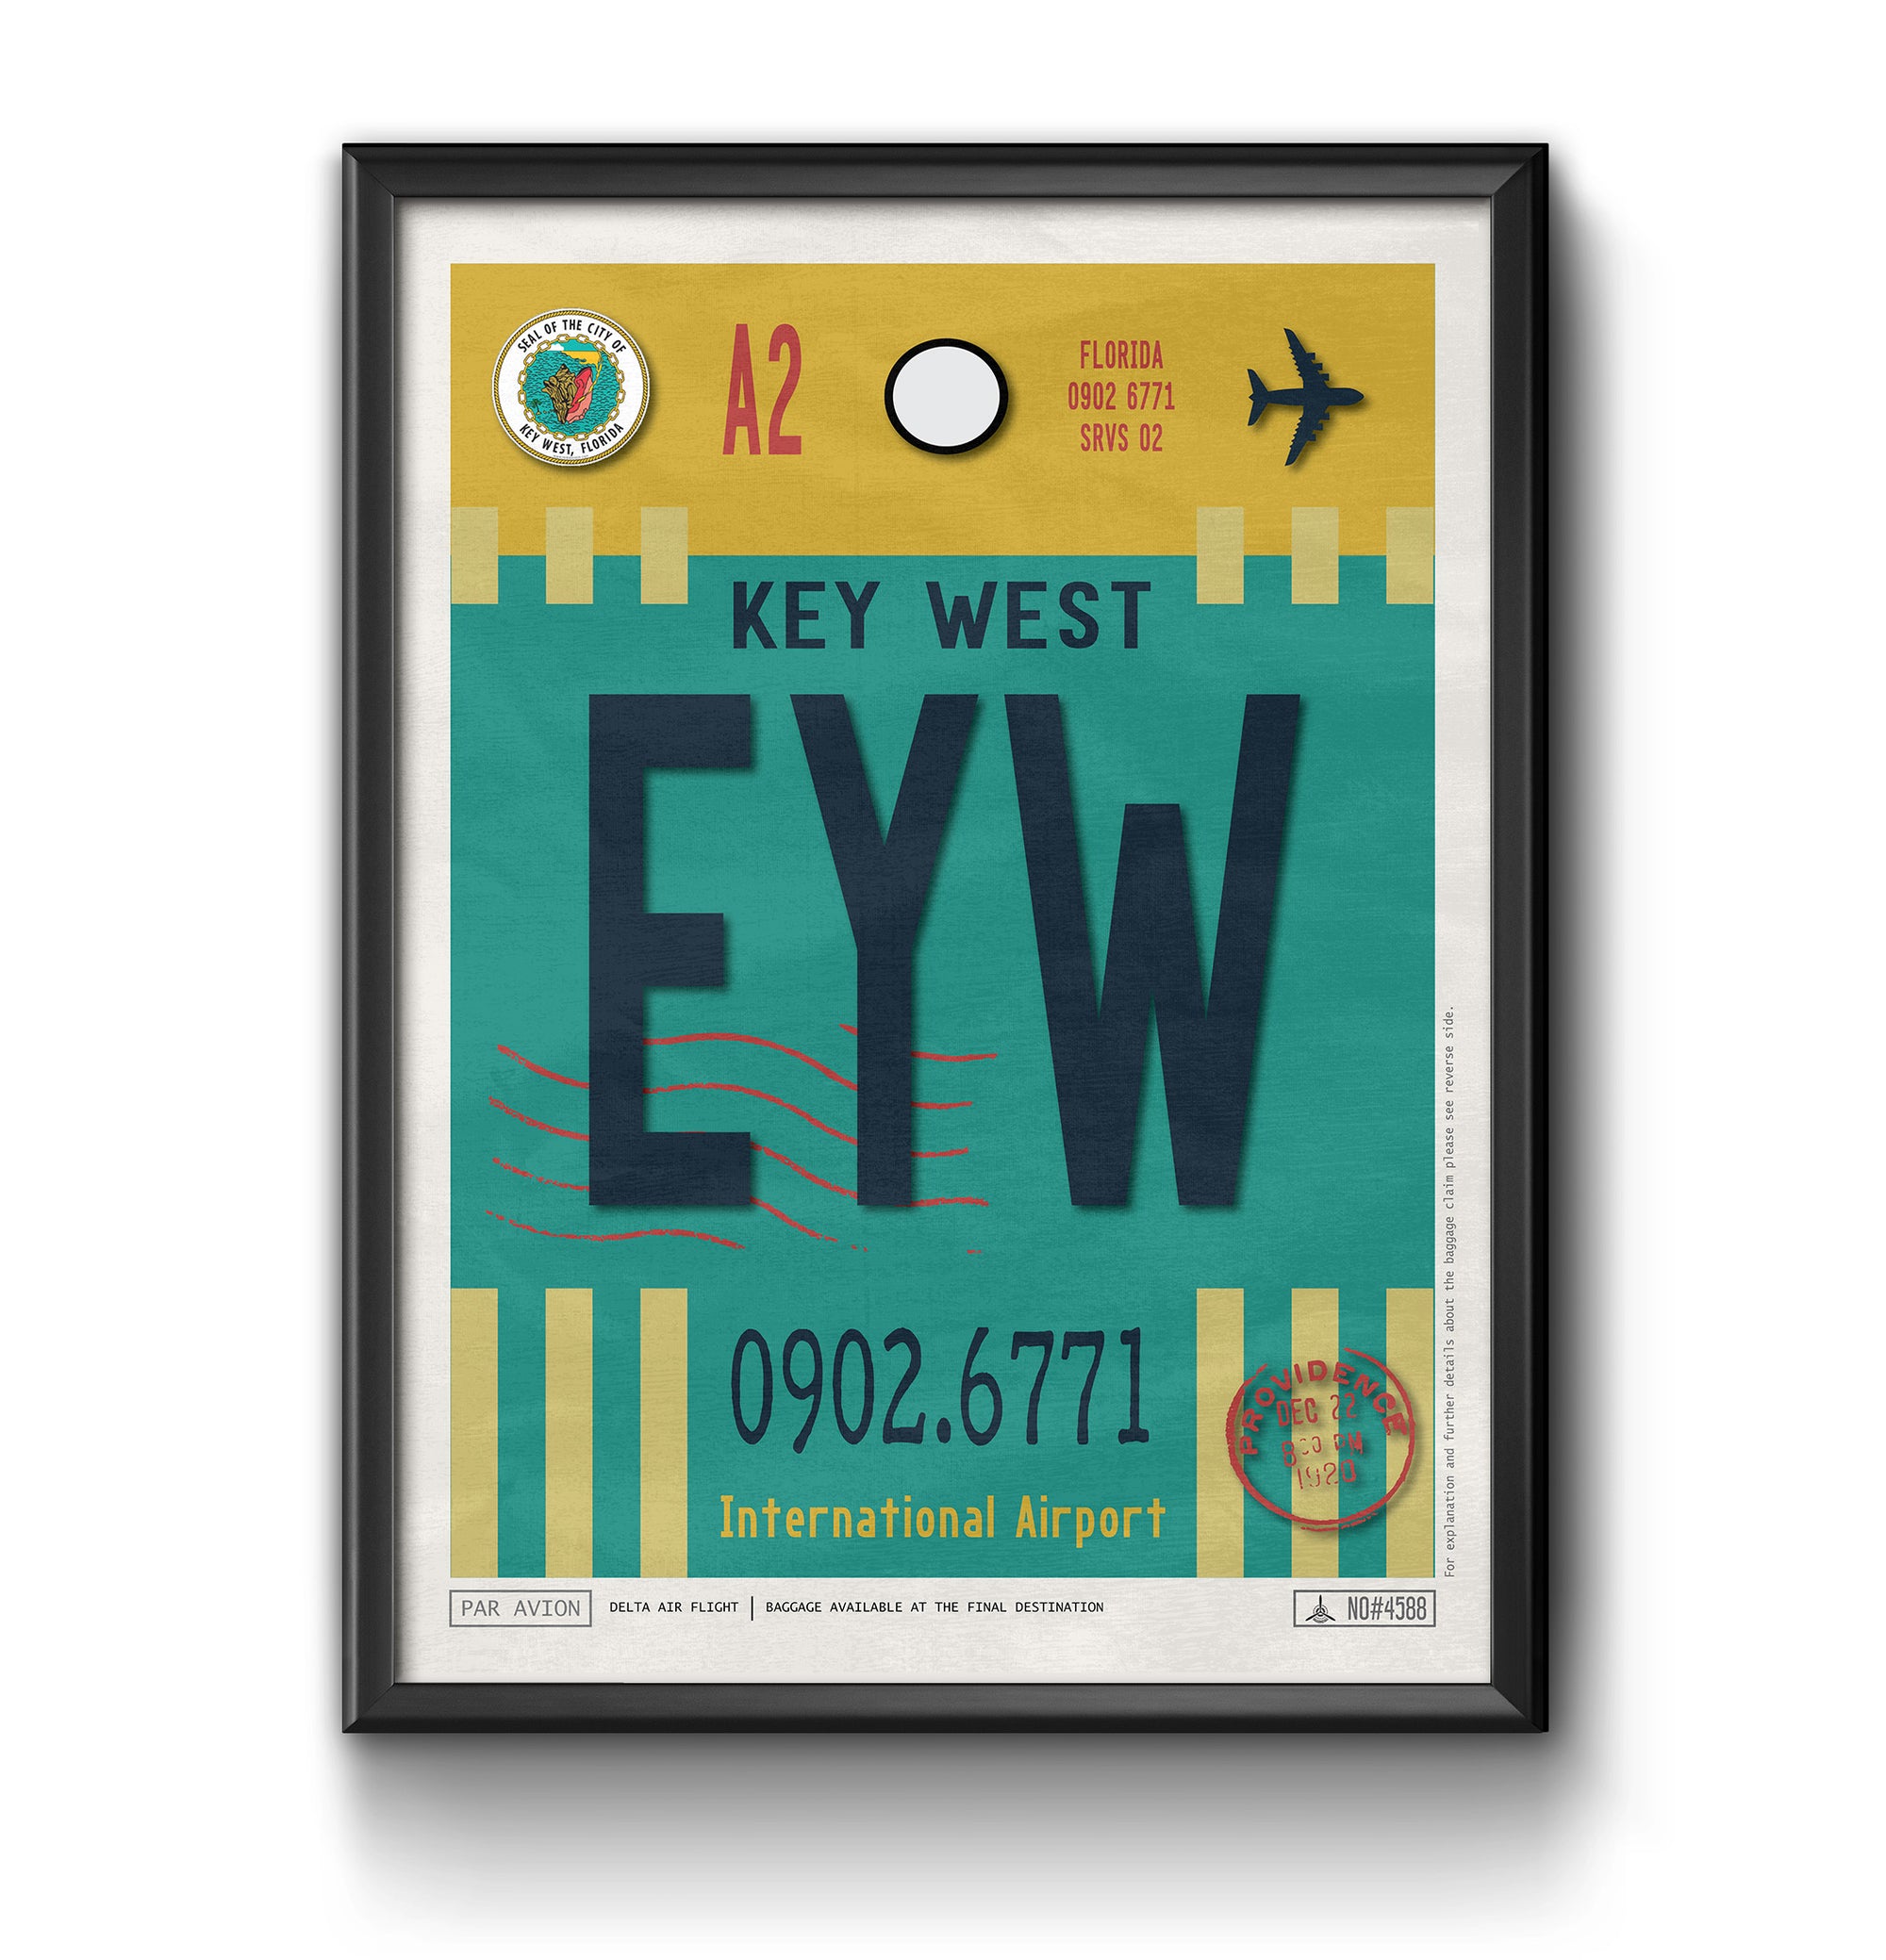 key west Florida EYW airport tag poster luggage tag 